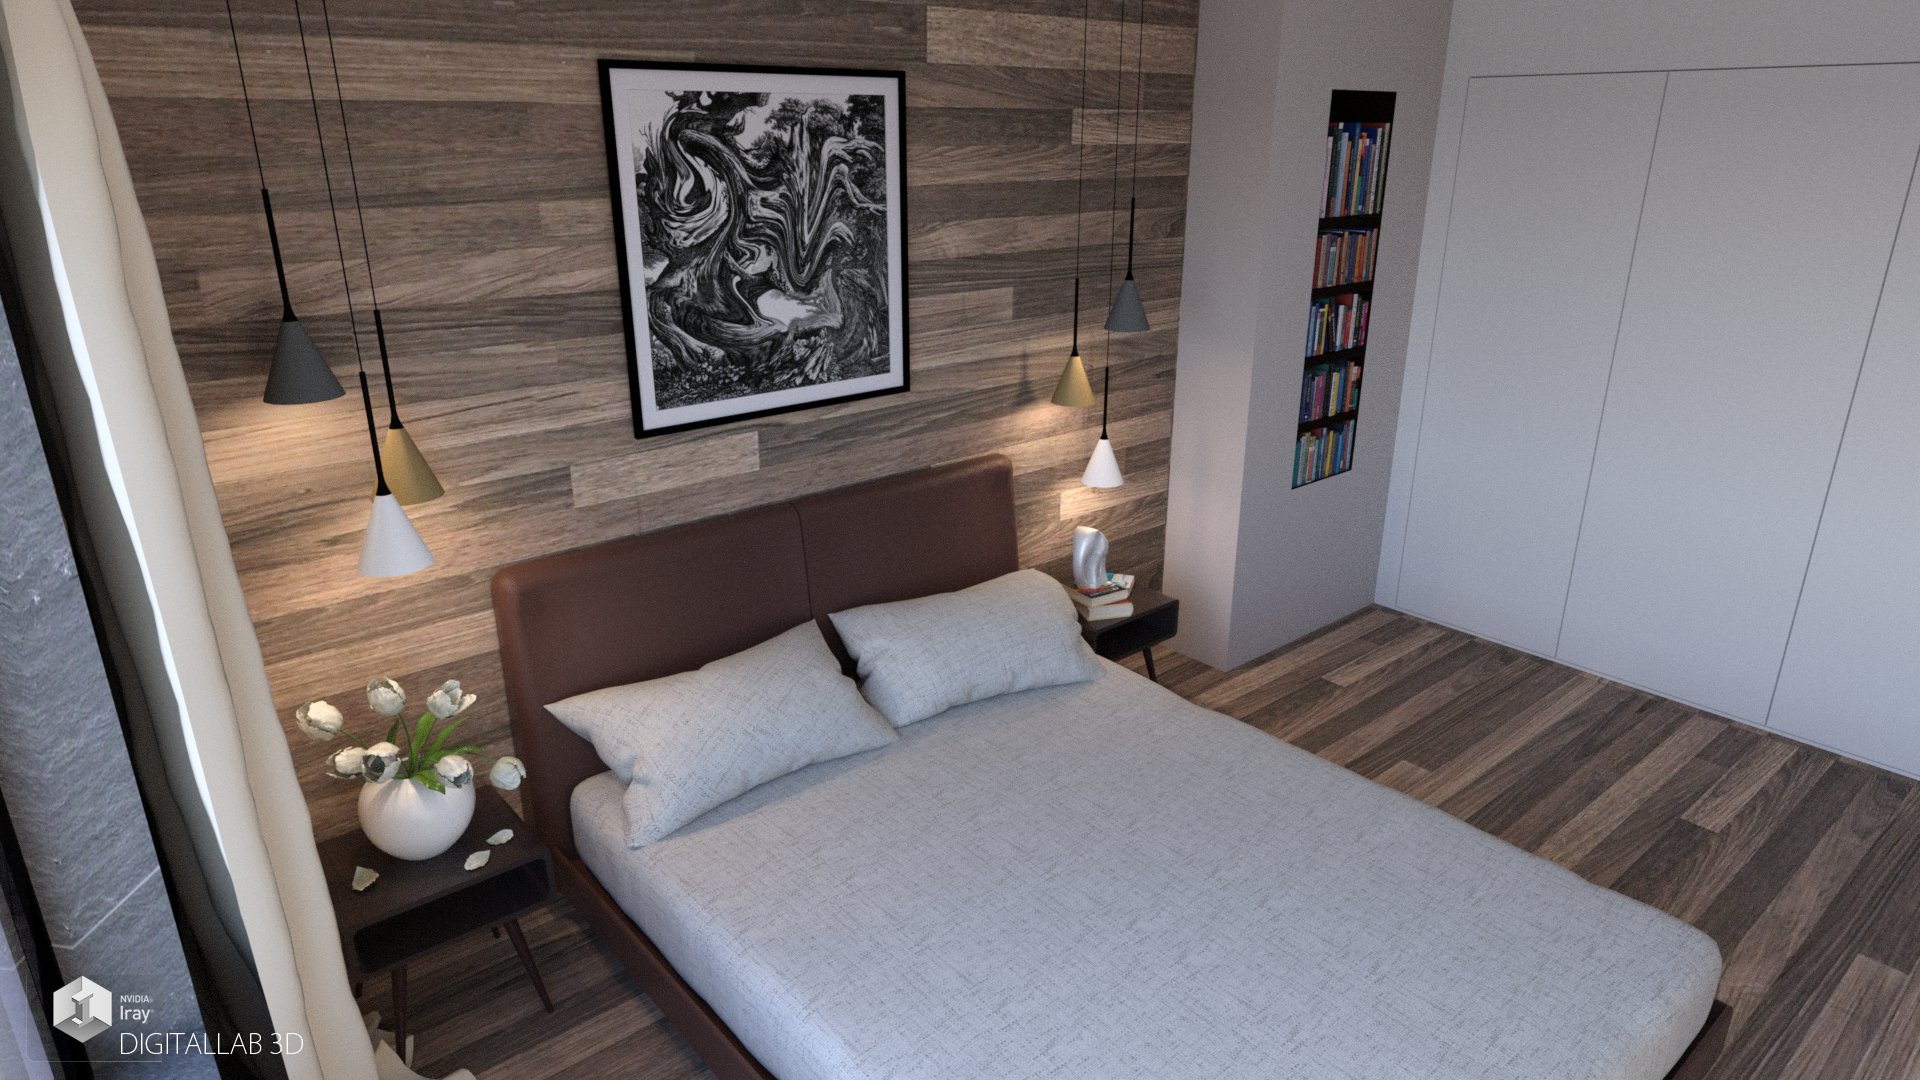 Euro Bedroom by: Digitallab3D, 3D Models by Daz 3D